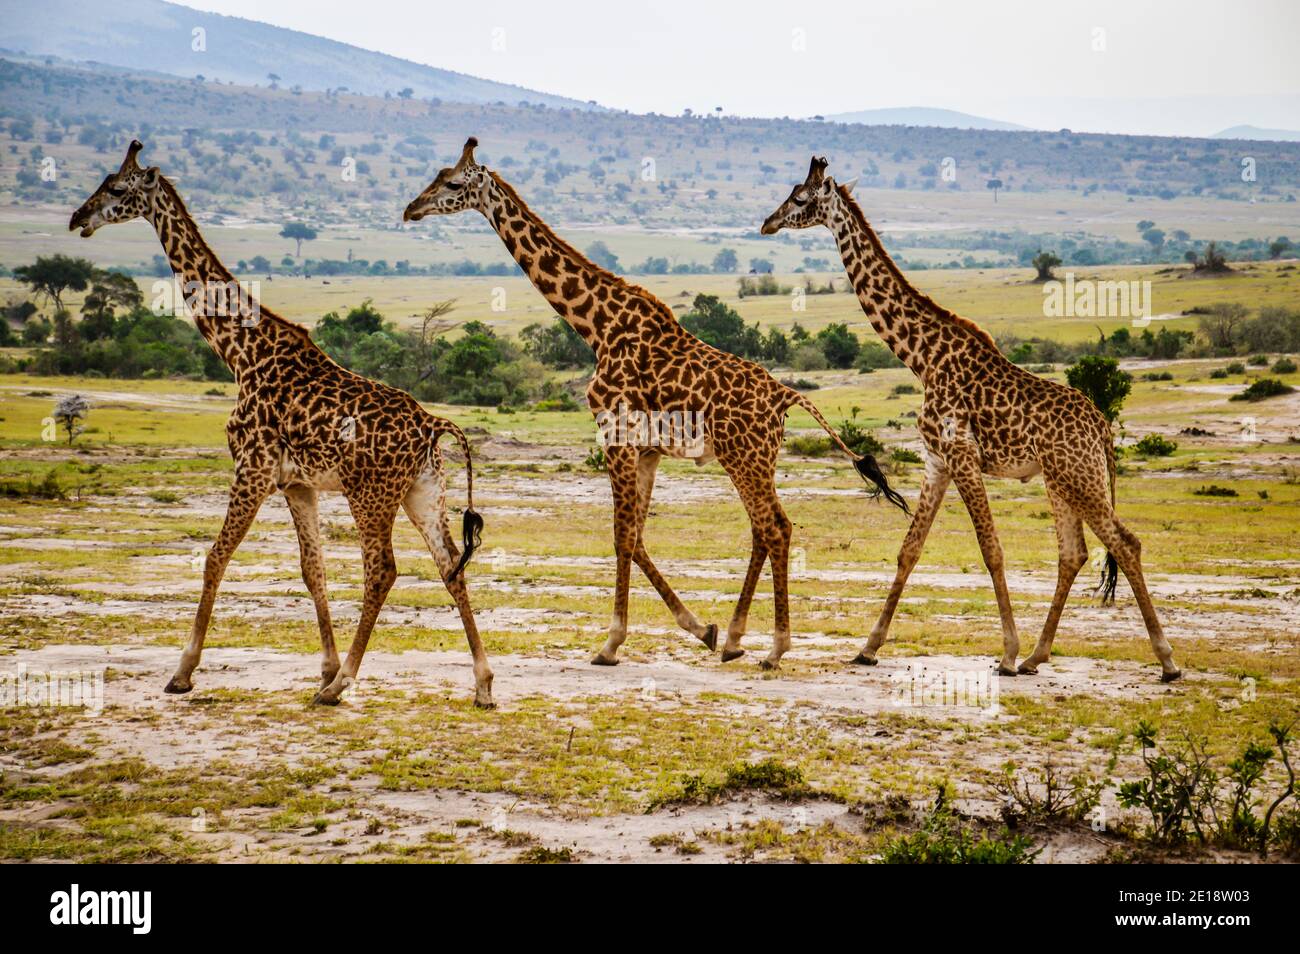 Three Giraffes Standing in Masai Mara Grassland Photo Art Print Poster 18x12 inc 